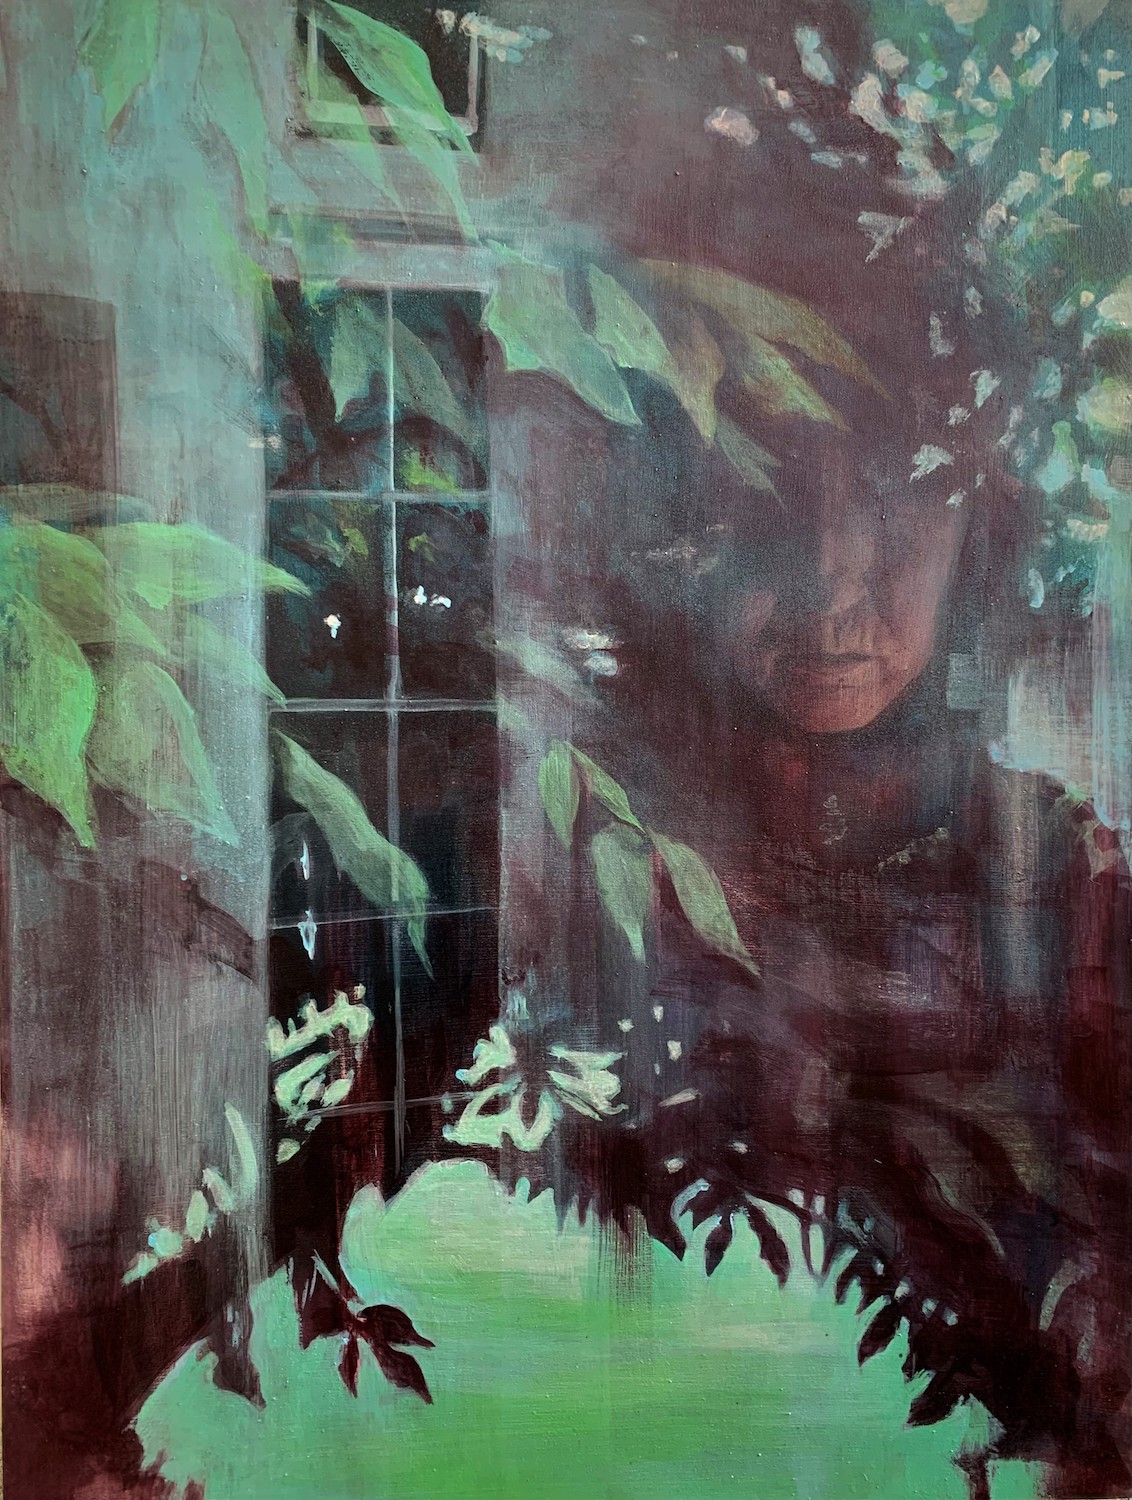 'Self-reflection', Angela Maloney, Acrylic on board, 61 x 46 cm